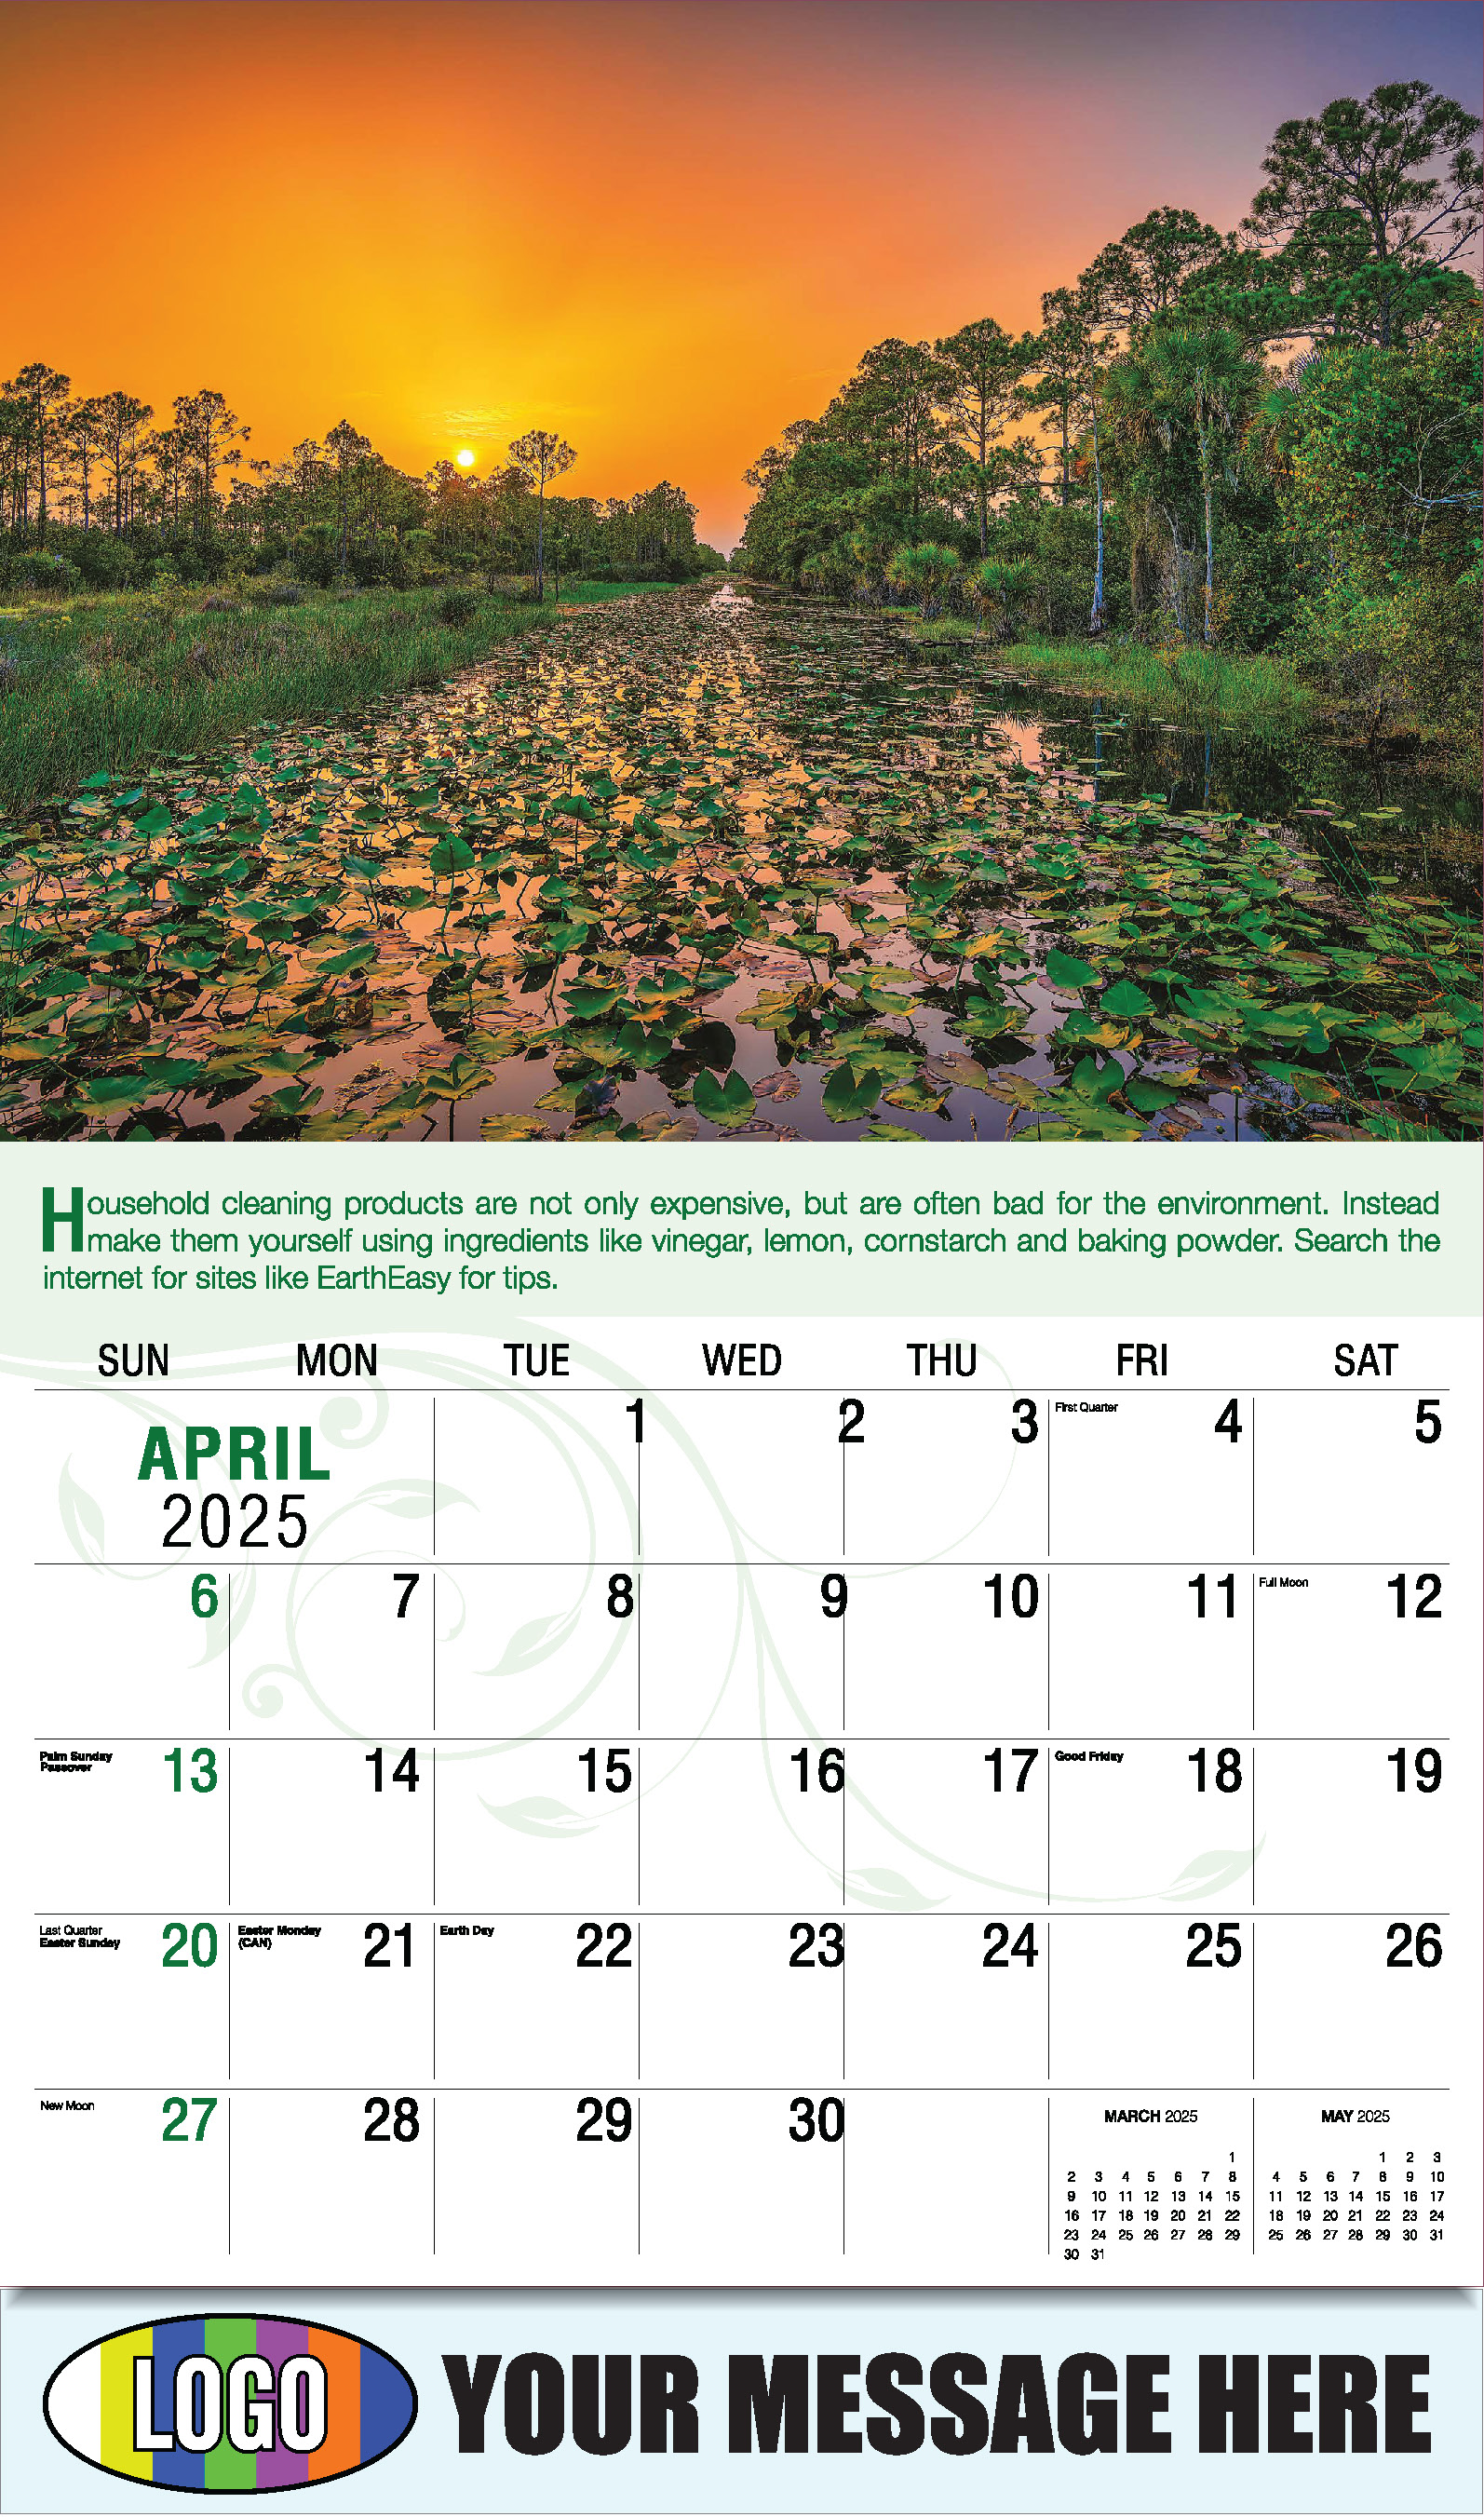 Go Green 2025 Business Promotion Calendar - April